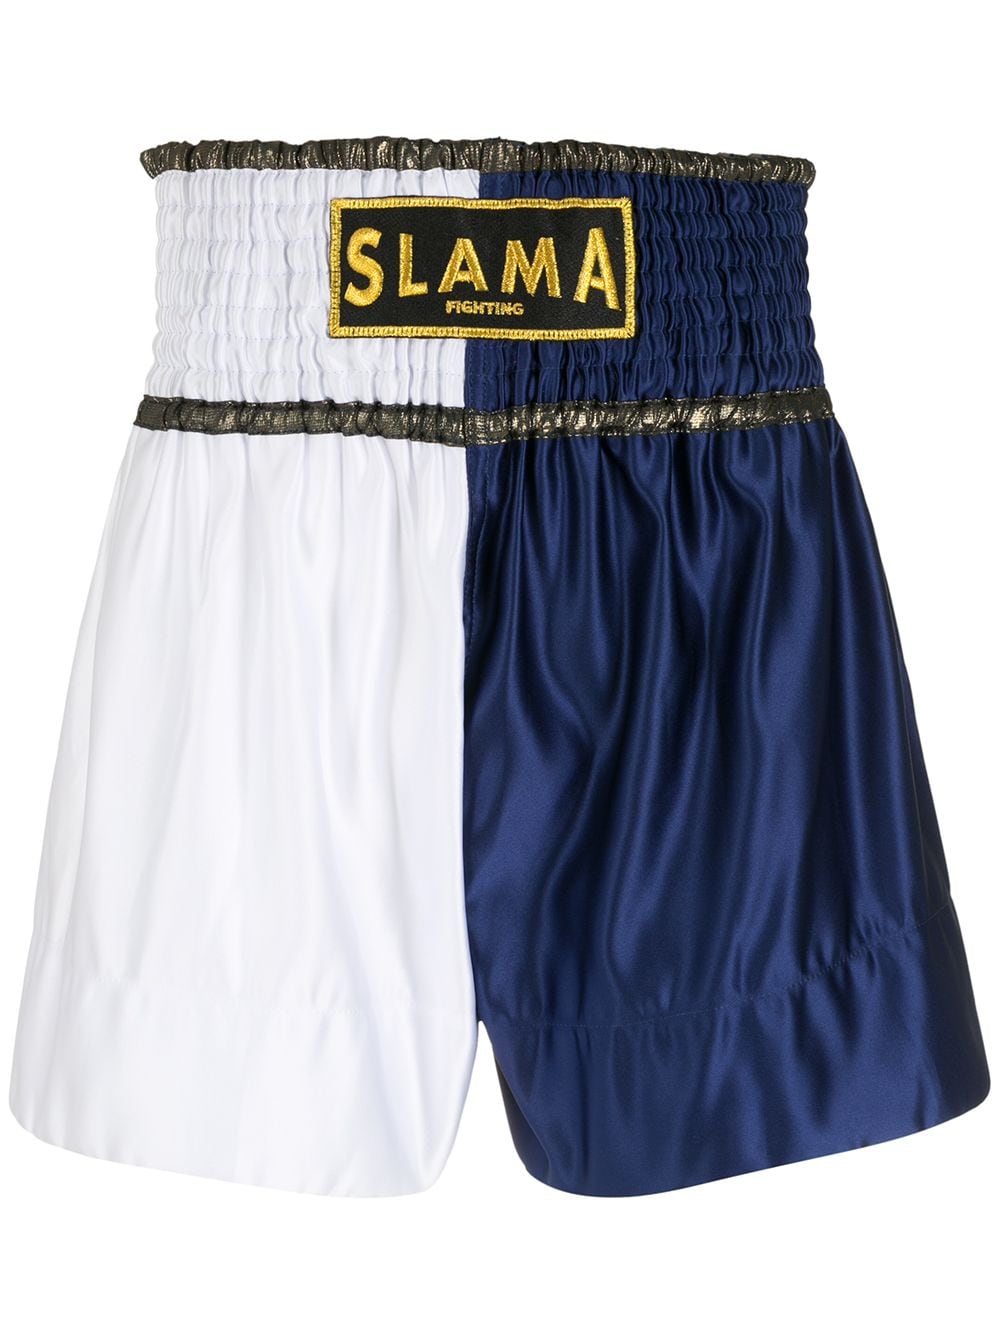 фото Amir slama шорты luta с логотипом